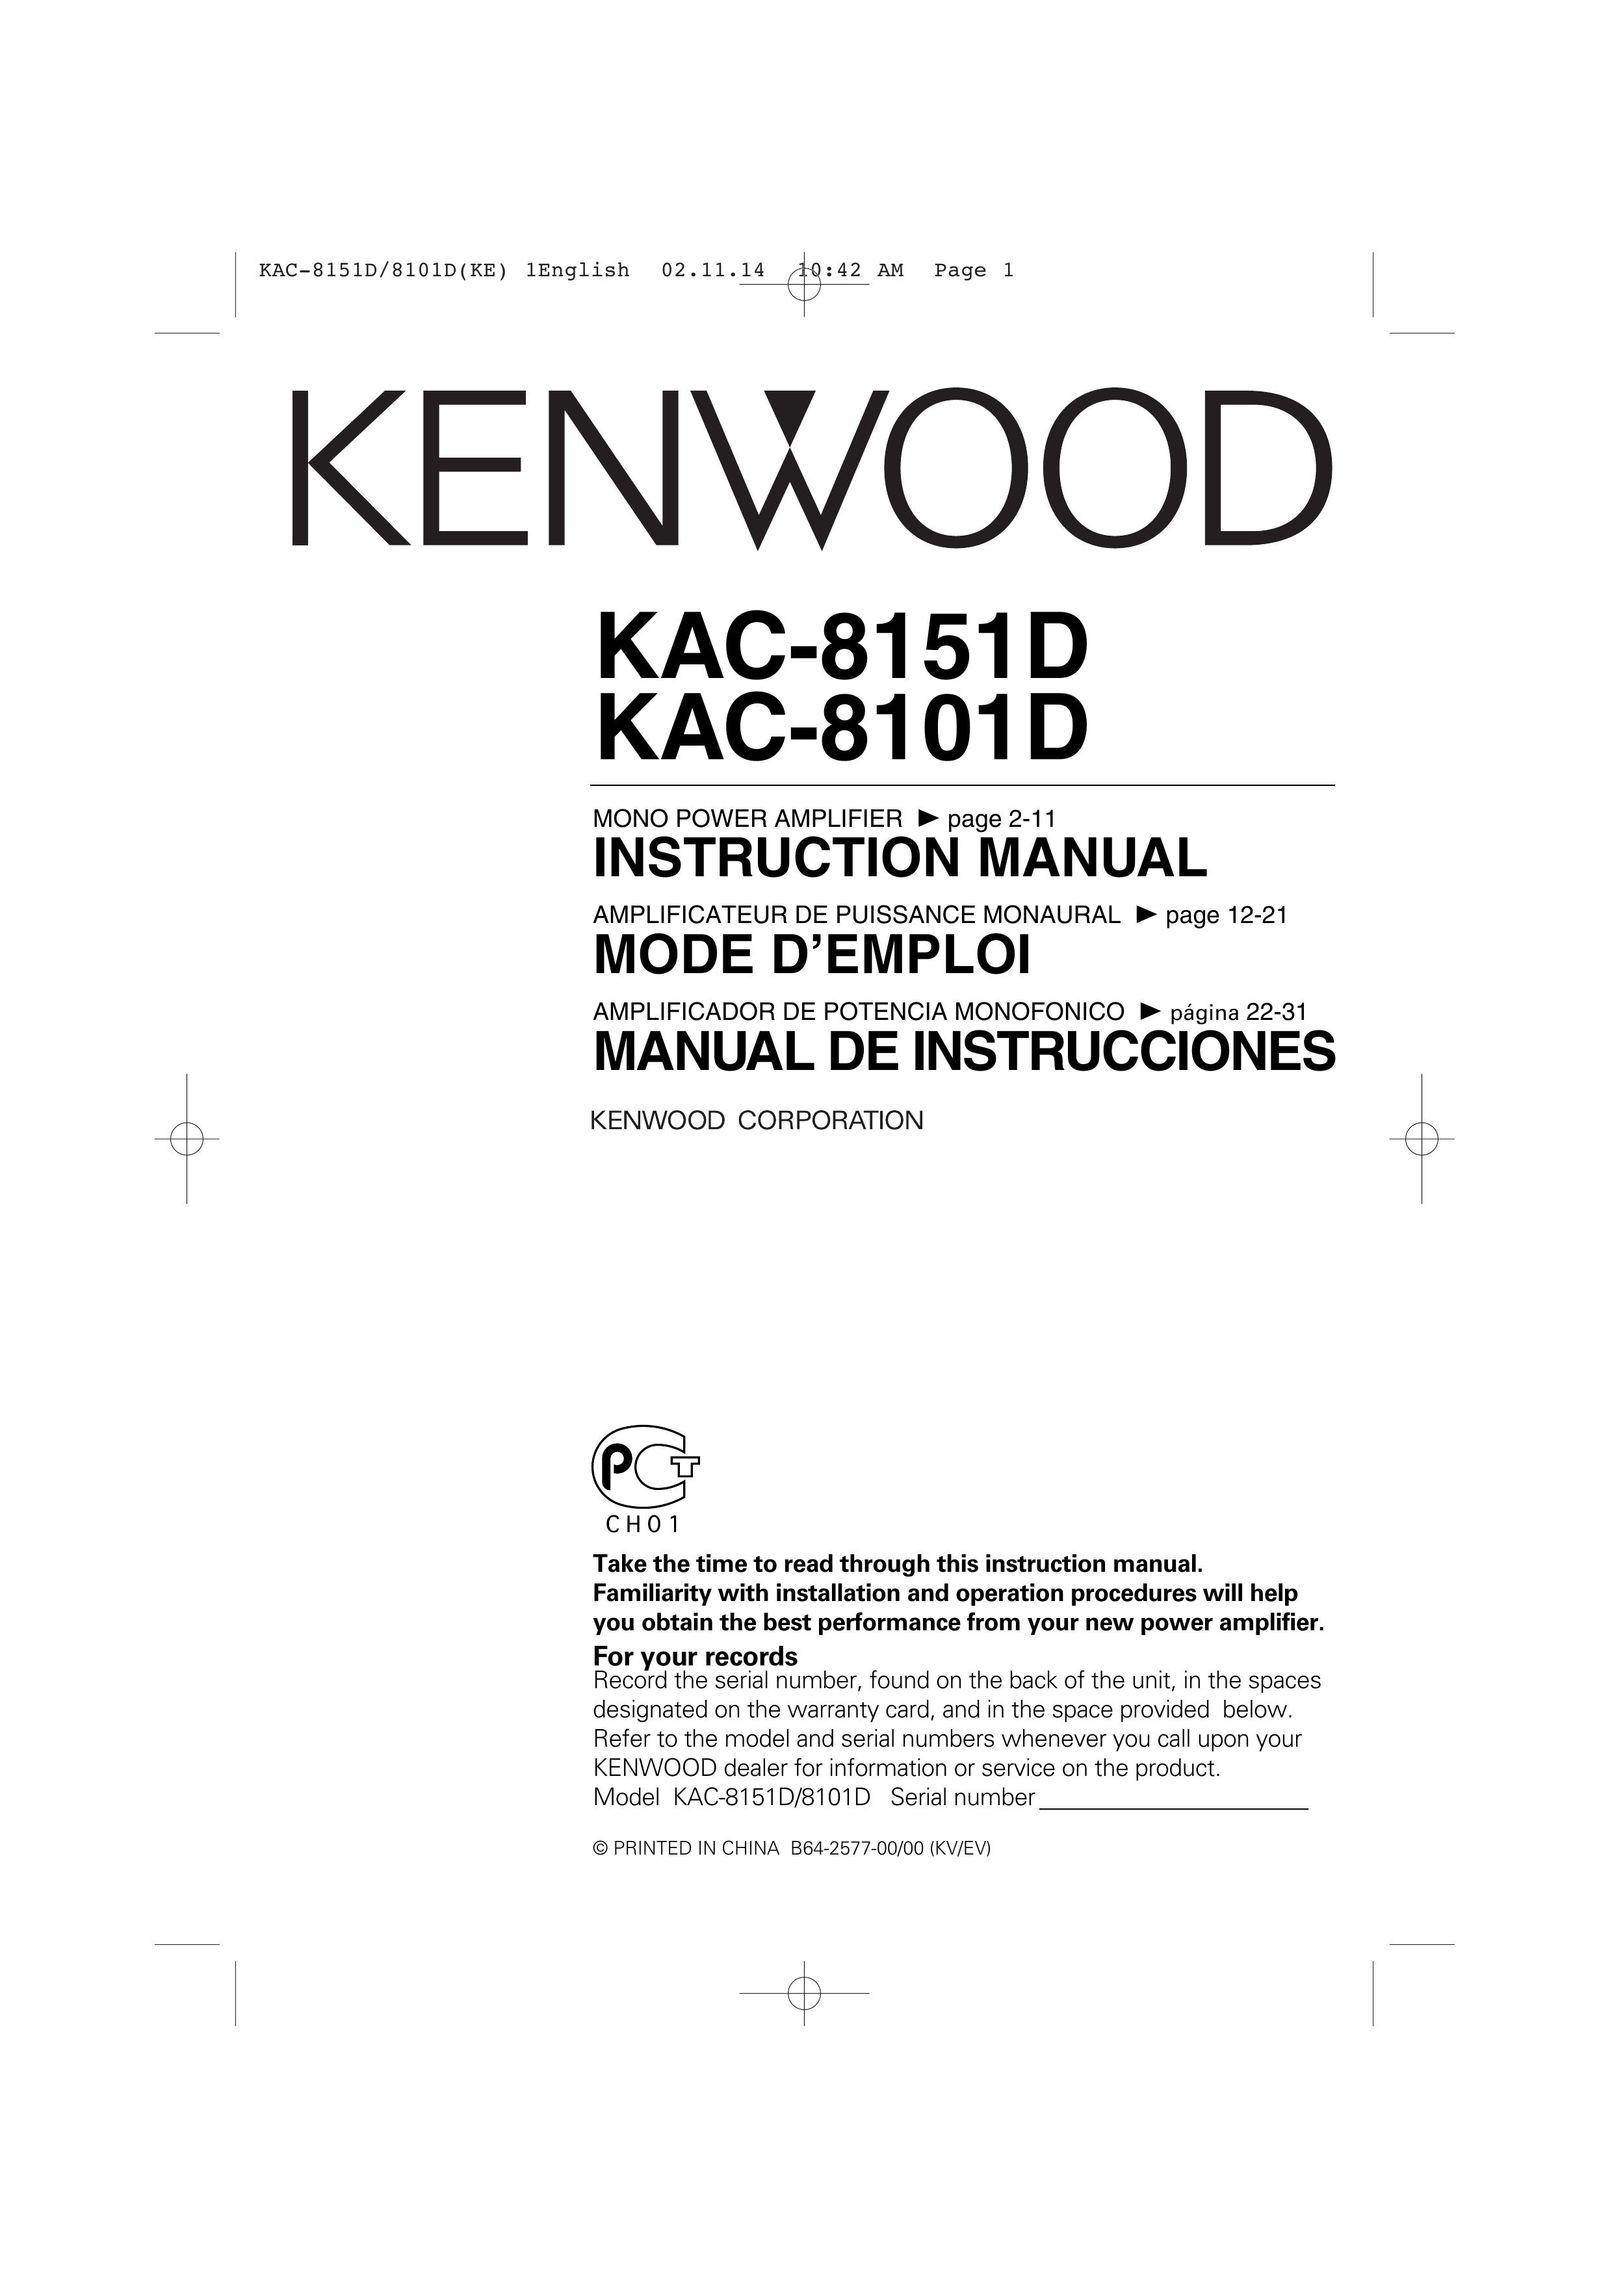 Kenwood KAC-8151D Stereo Amplifier User Manual